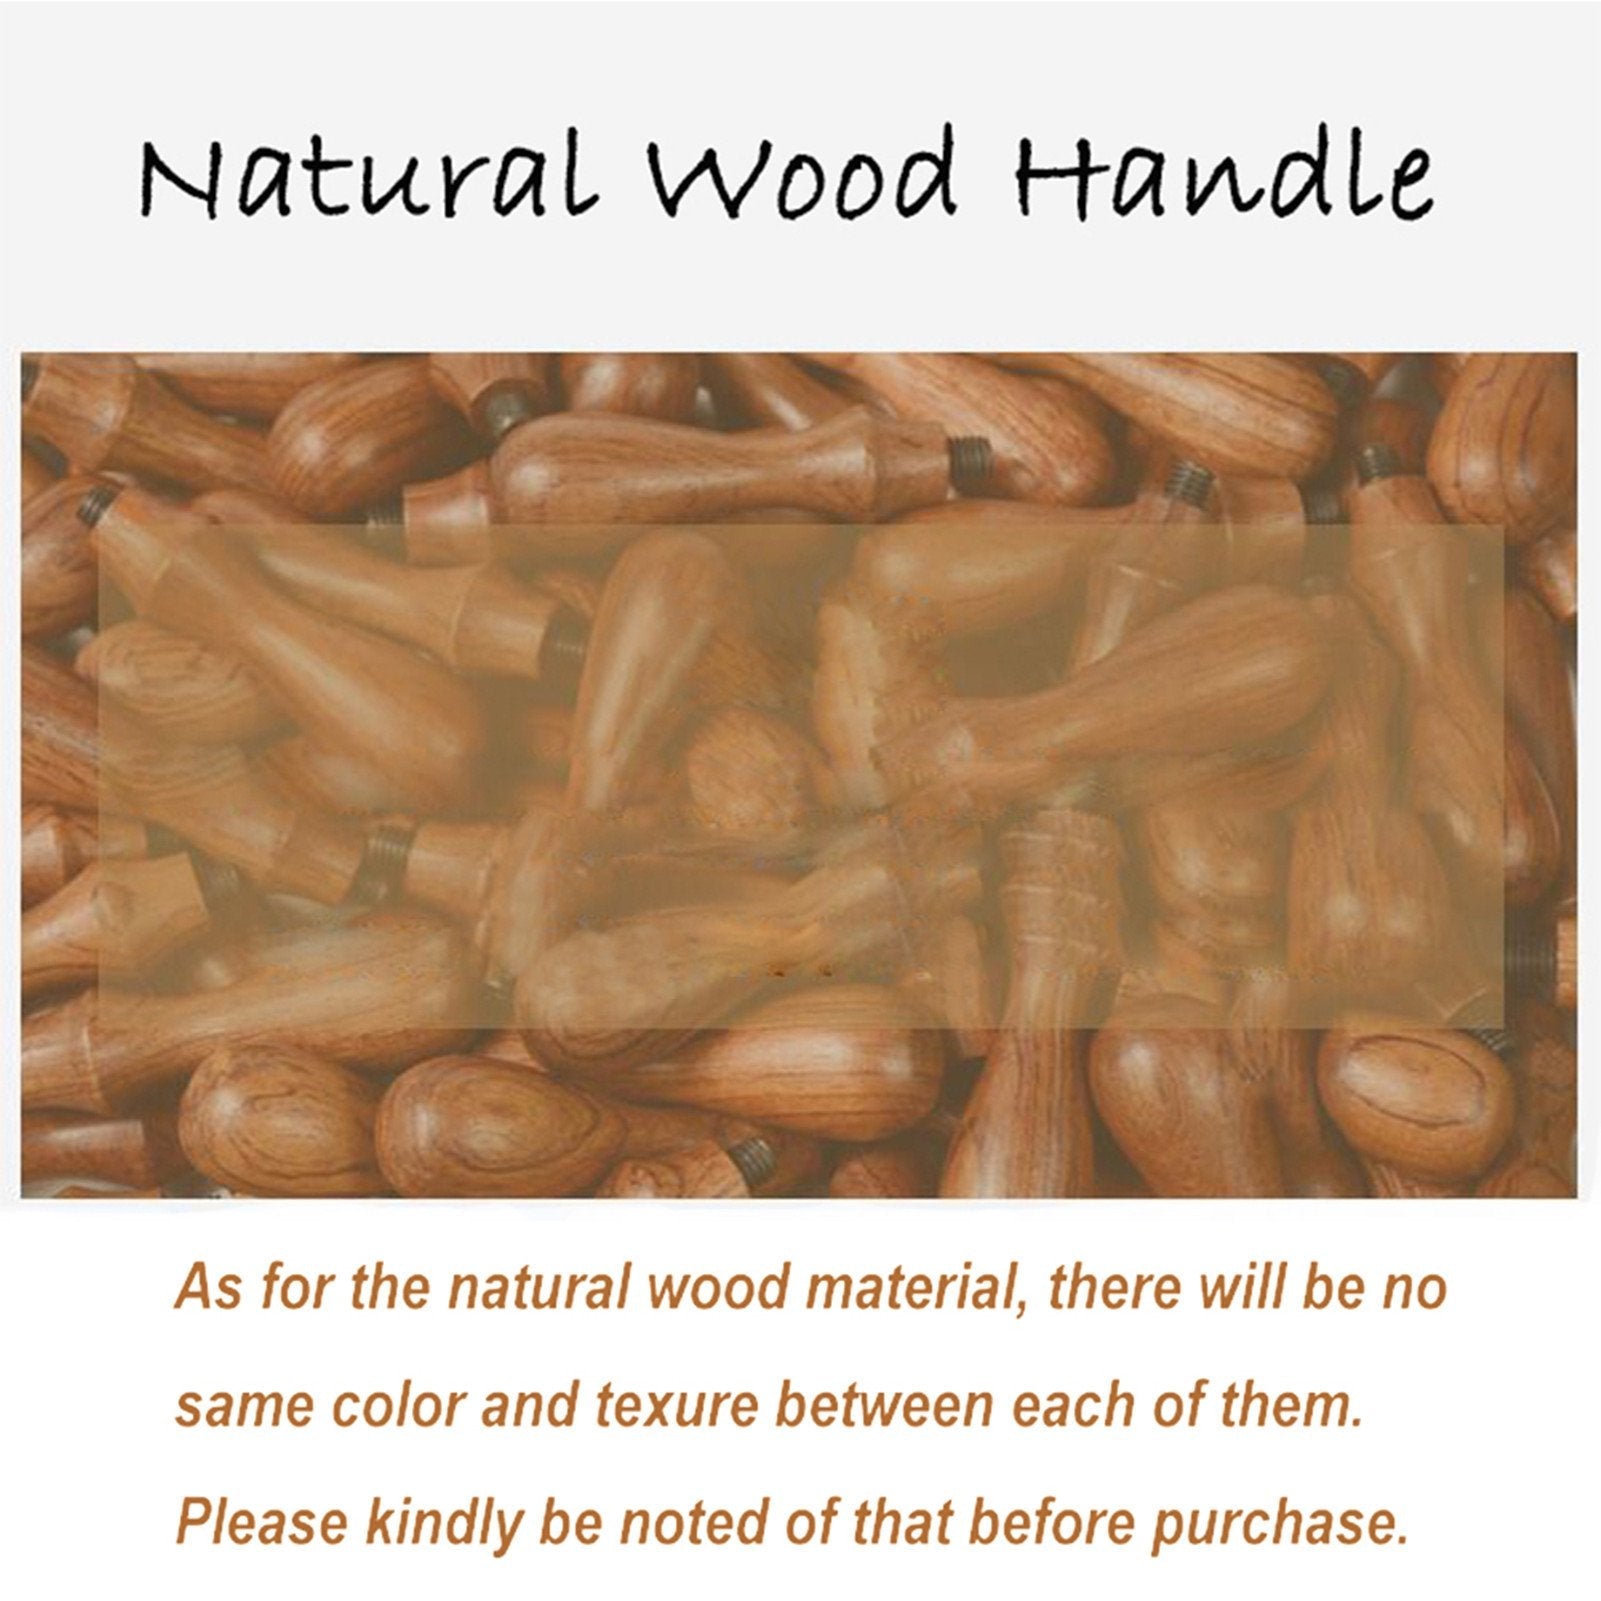 Word Be Happy-1 Wood Handle Wax Seal Stamp